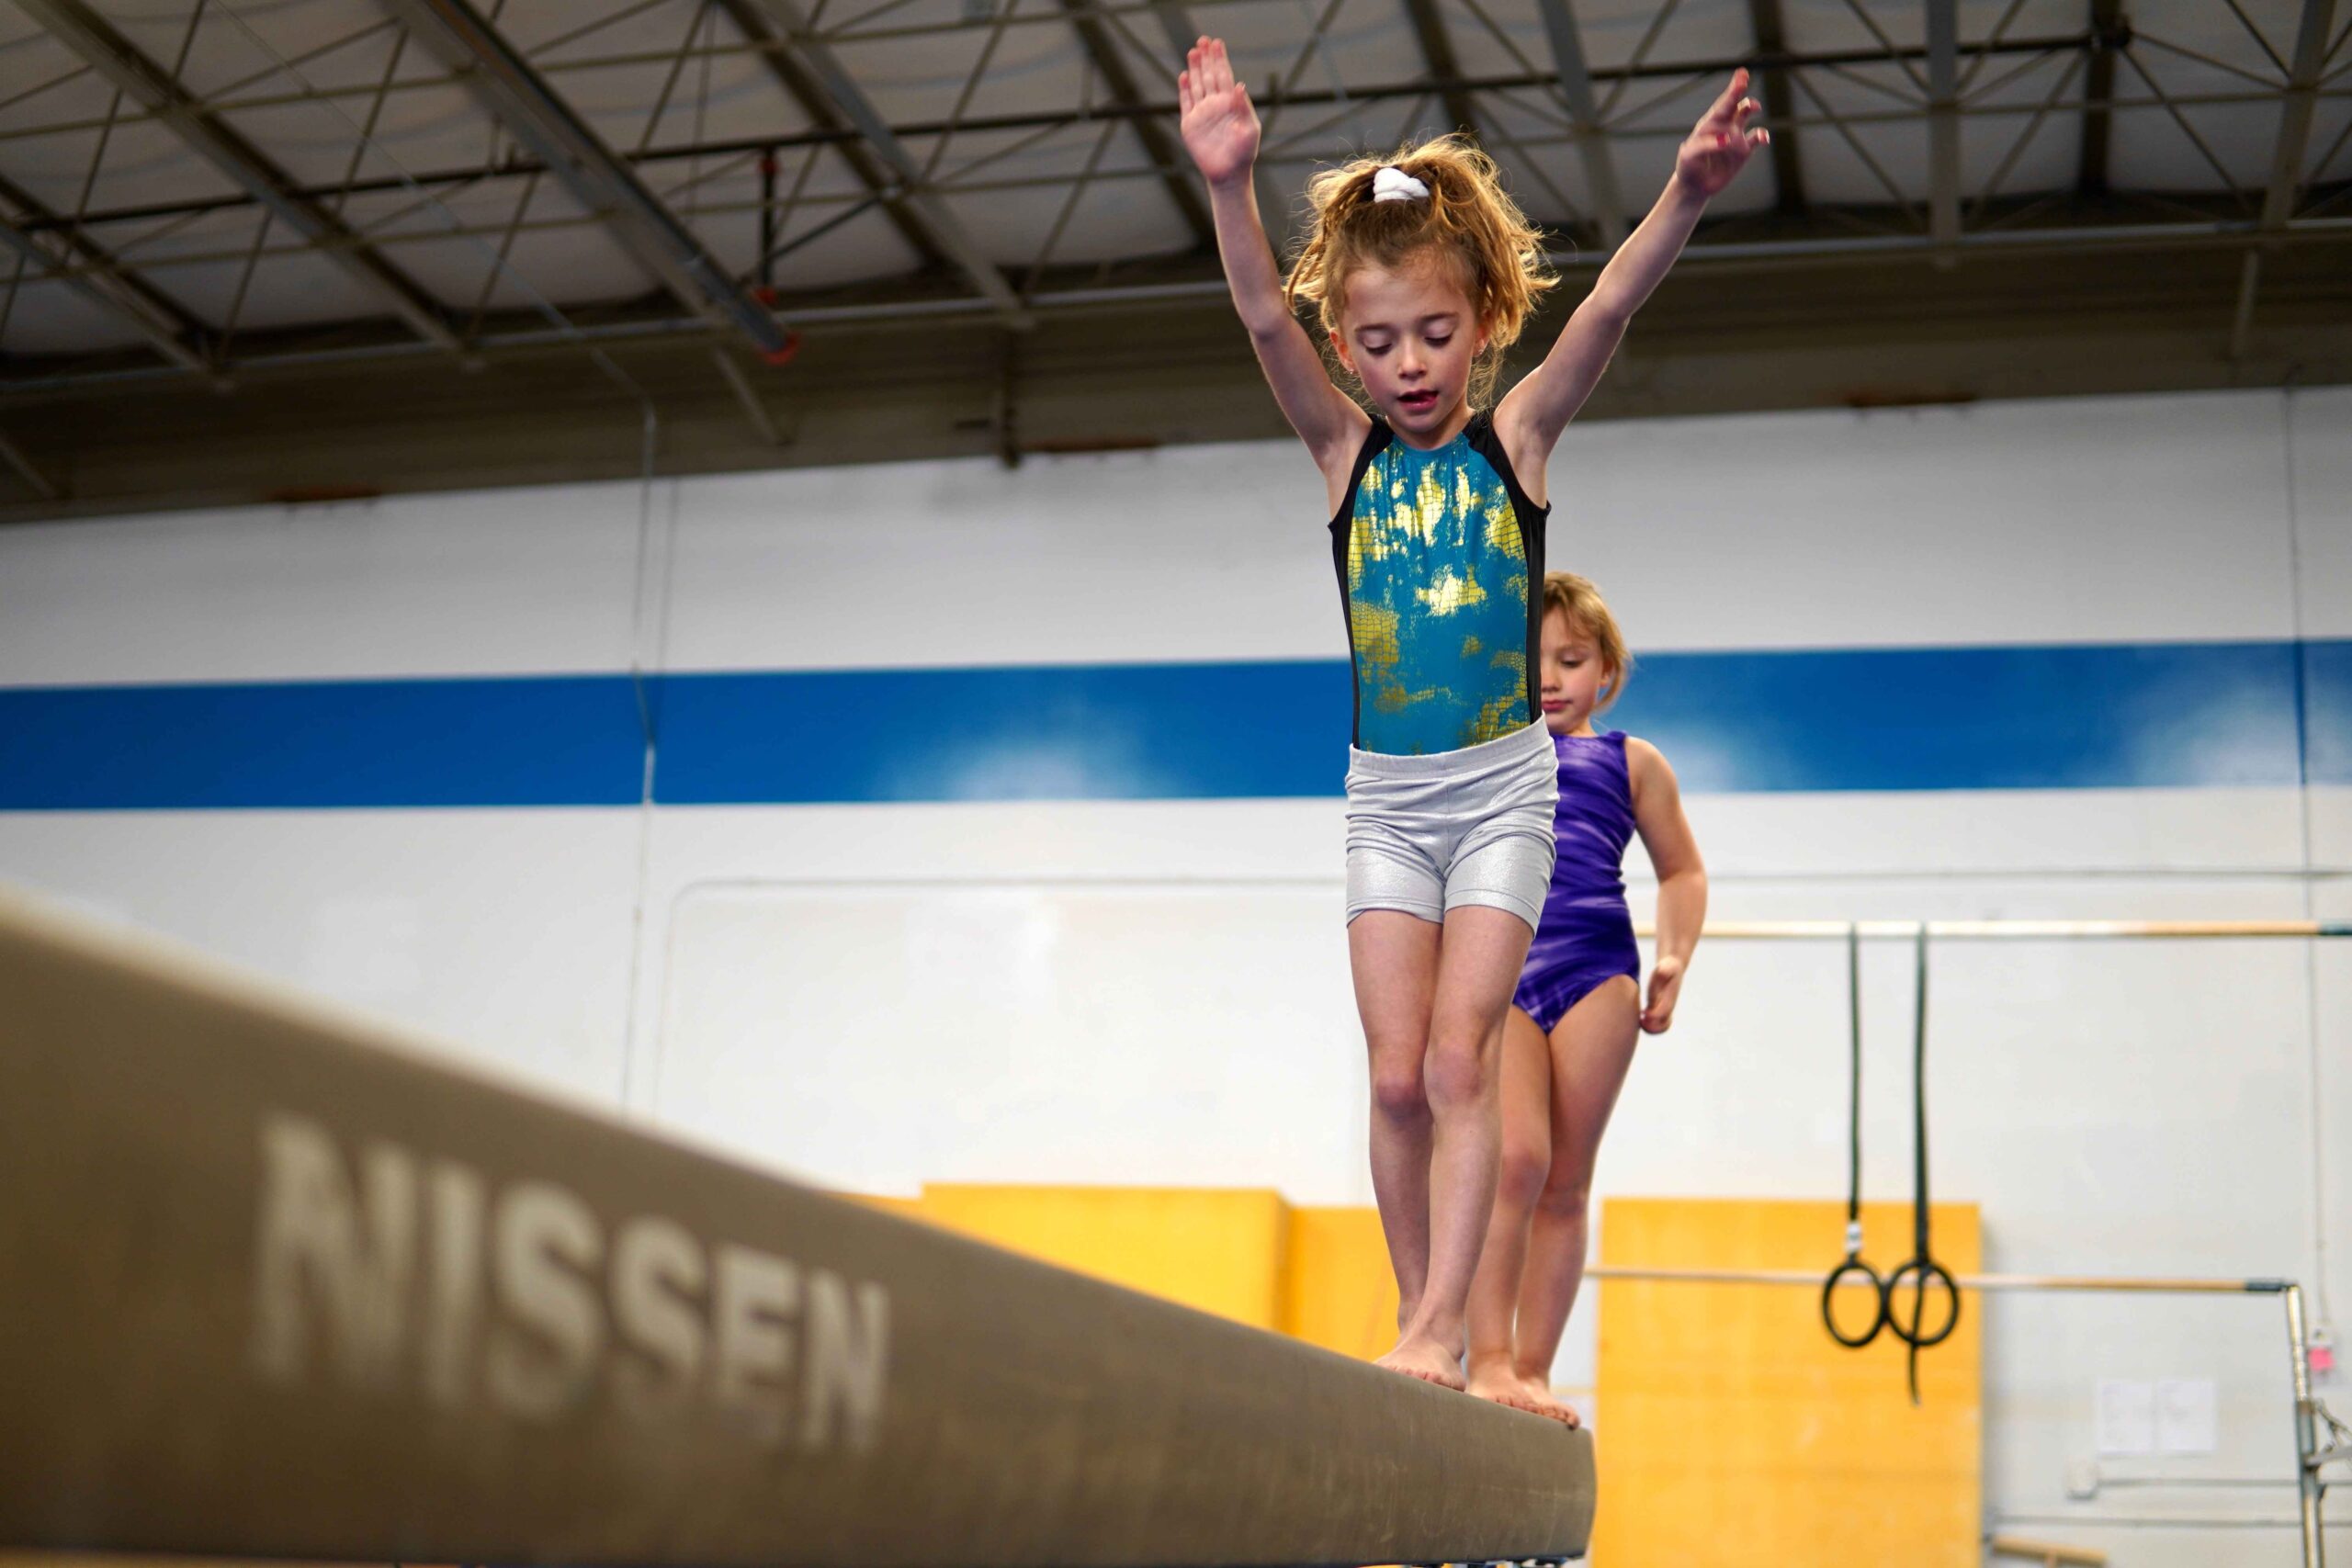 Girl on beam gymnastics